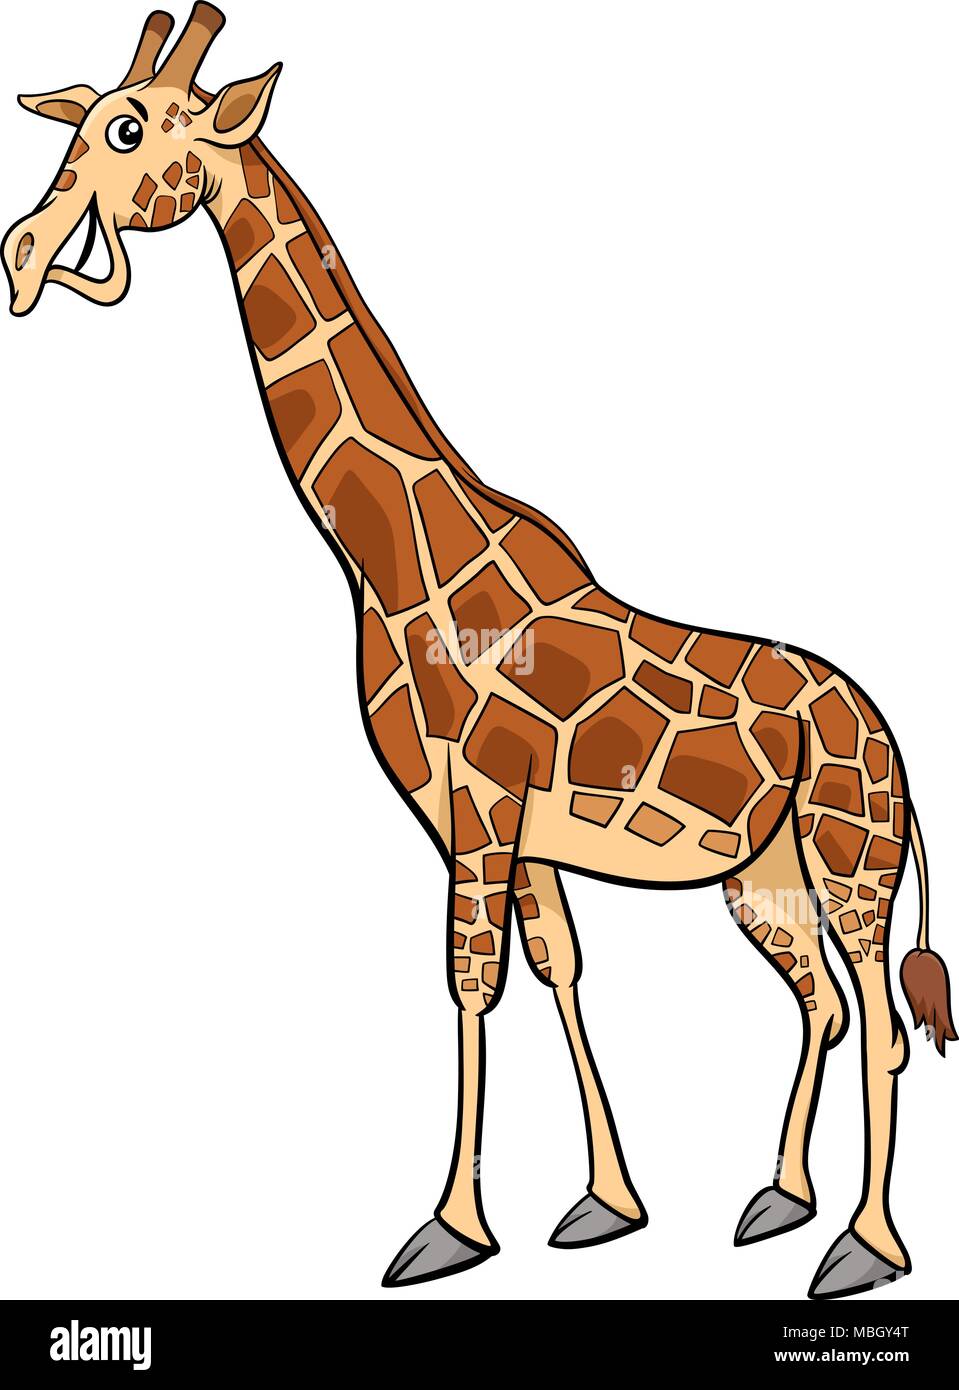 Cartoon Illustration of Giraffe Wild Animal Character Stock Vector